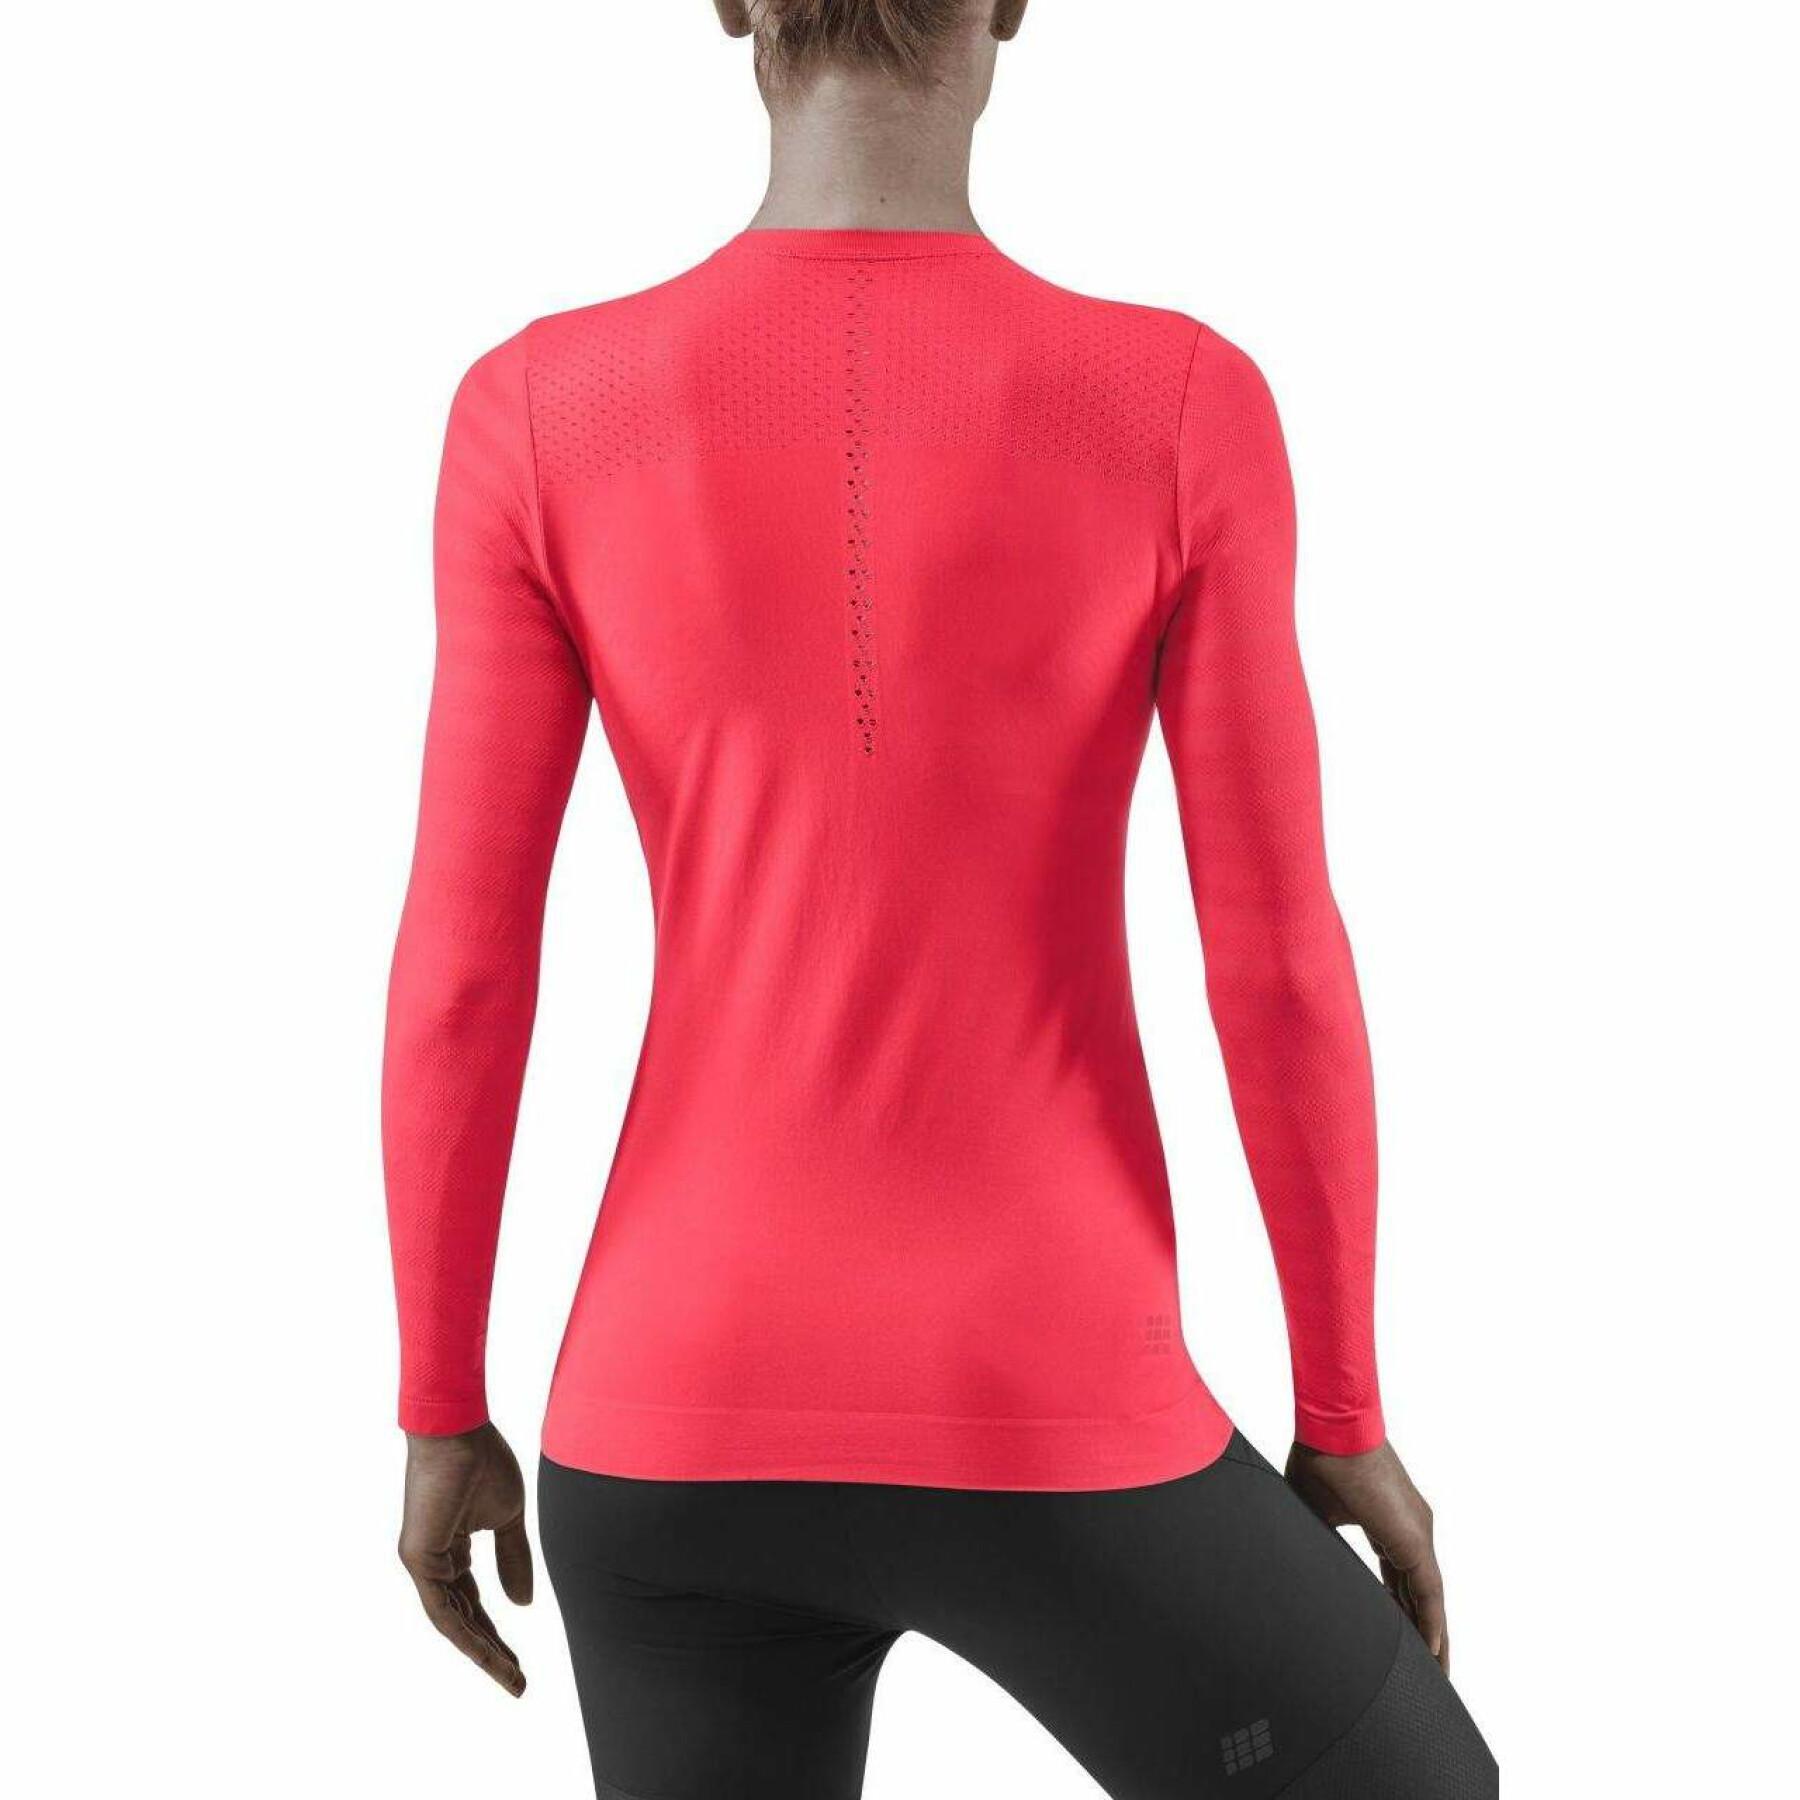 Women's long-sleeved ultra-light jersey CEP Compression Run